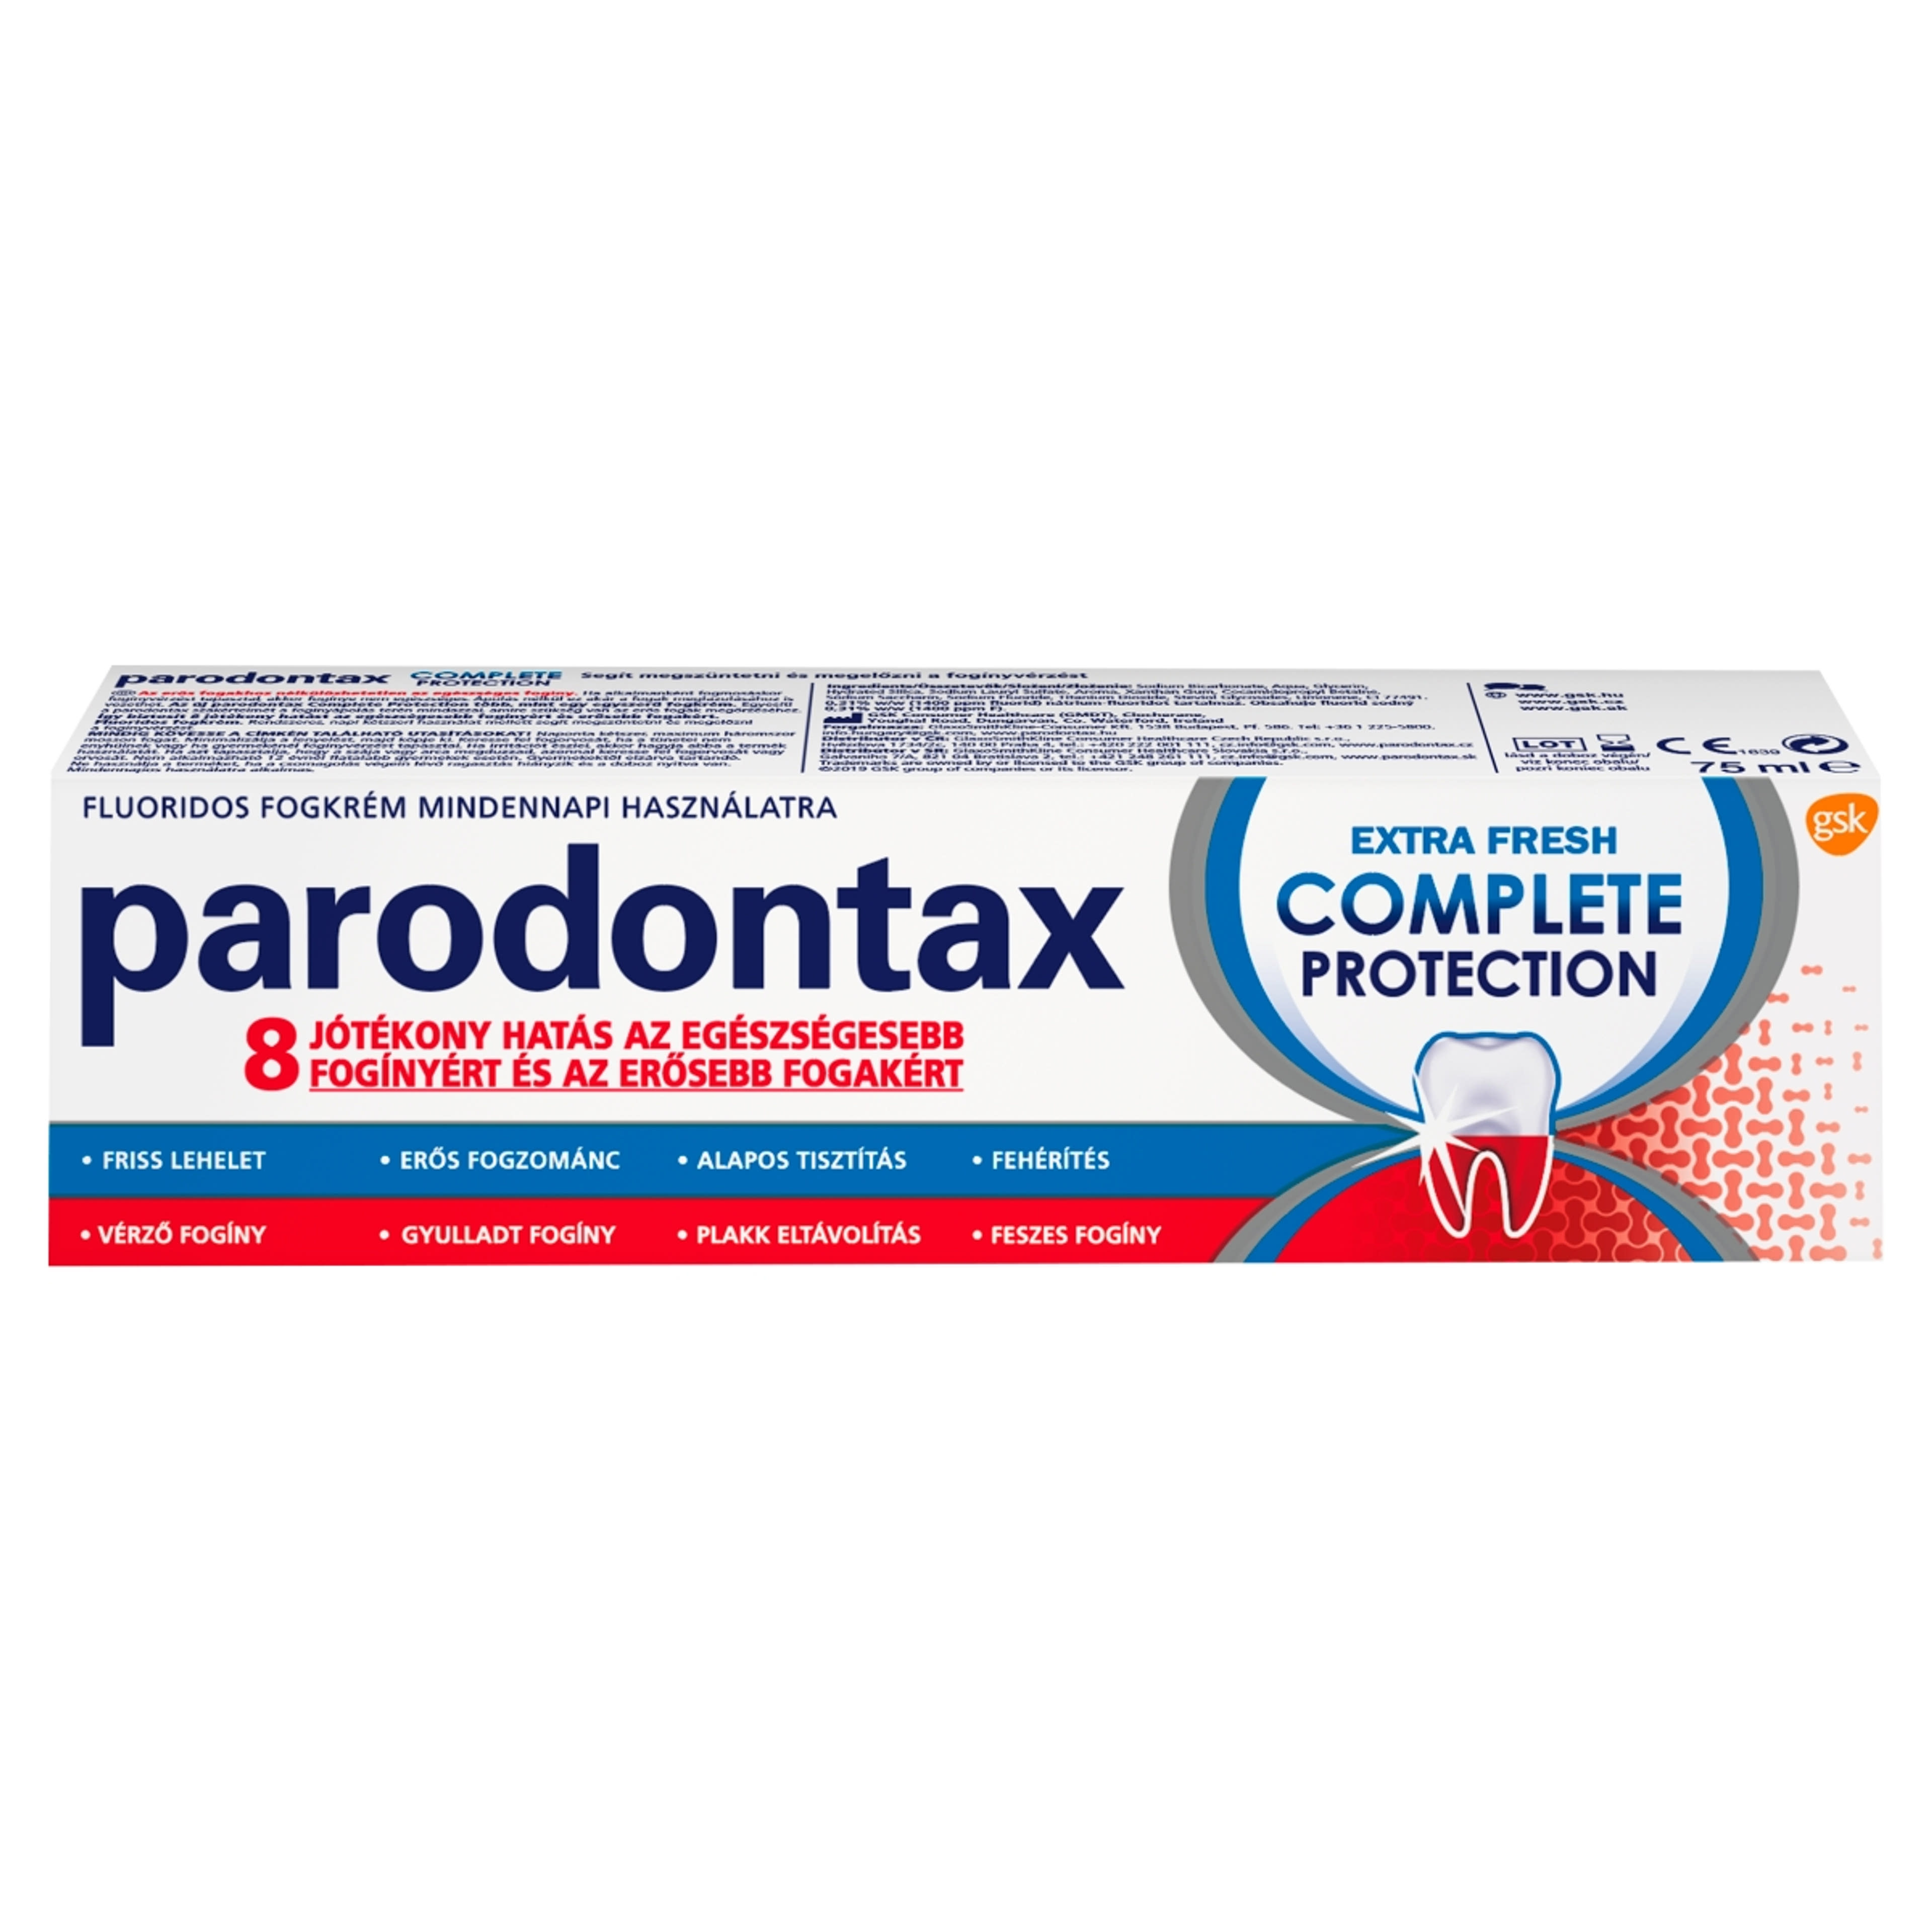 Parodontax Complete Protection Extra Fresh fogkrém - 75 ml-1